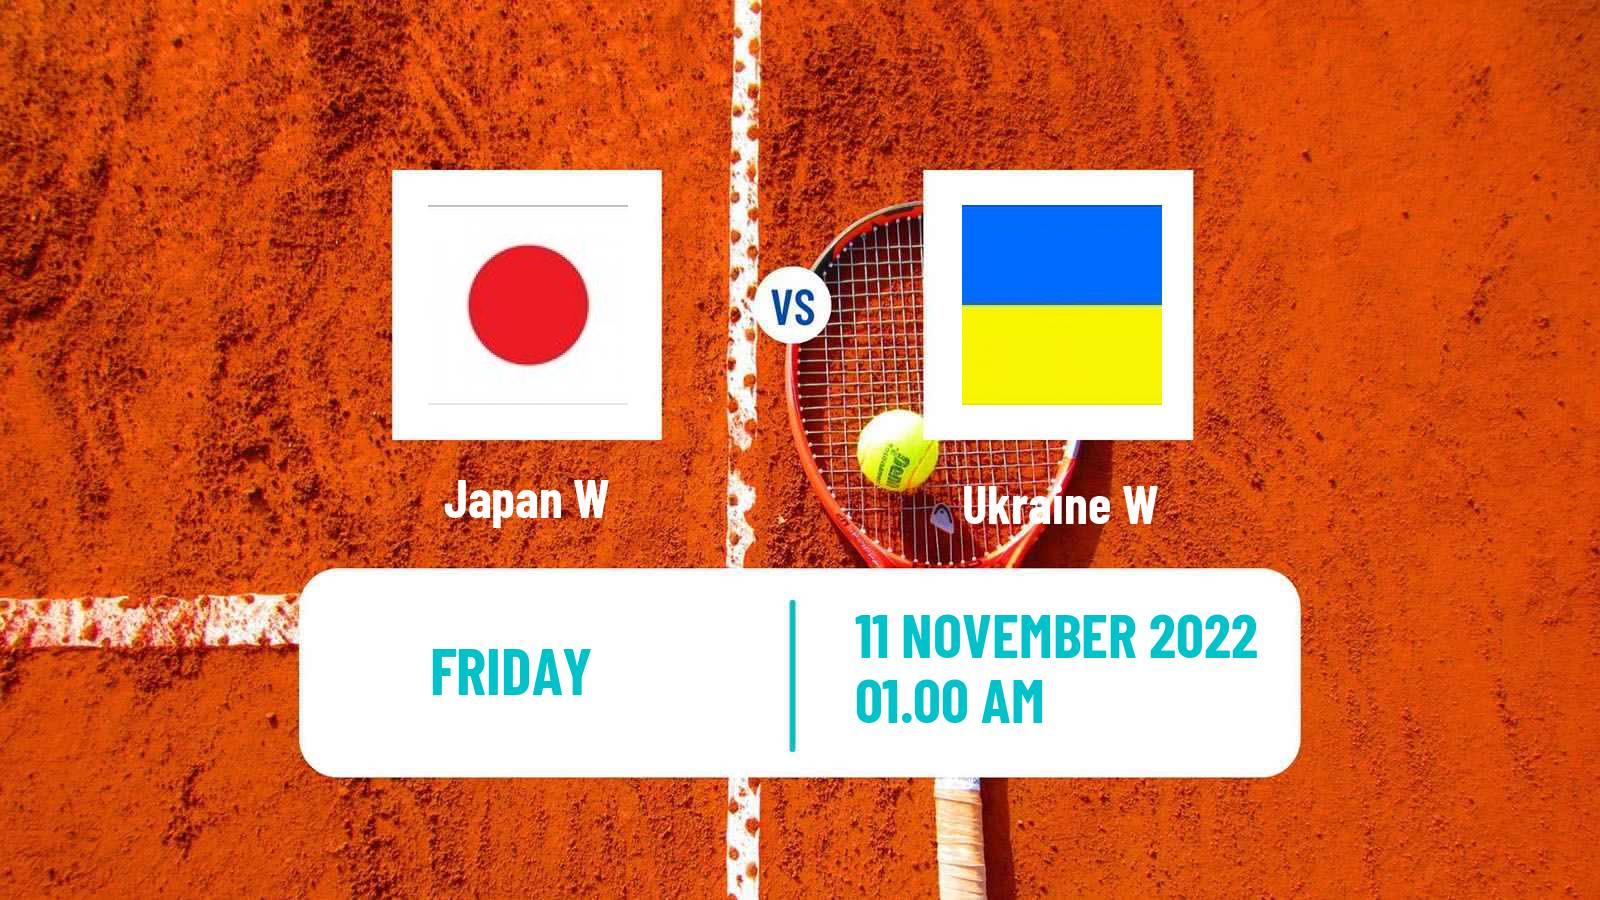 Tennis WTA Billie Jean King Cup World Group Teams Japan W - Ukraine W